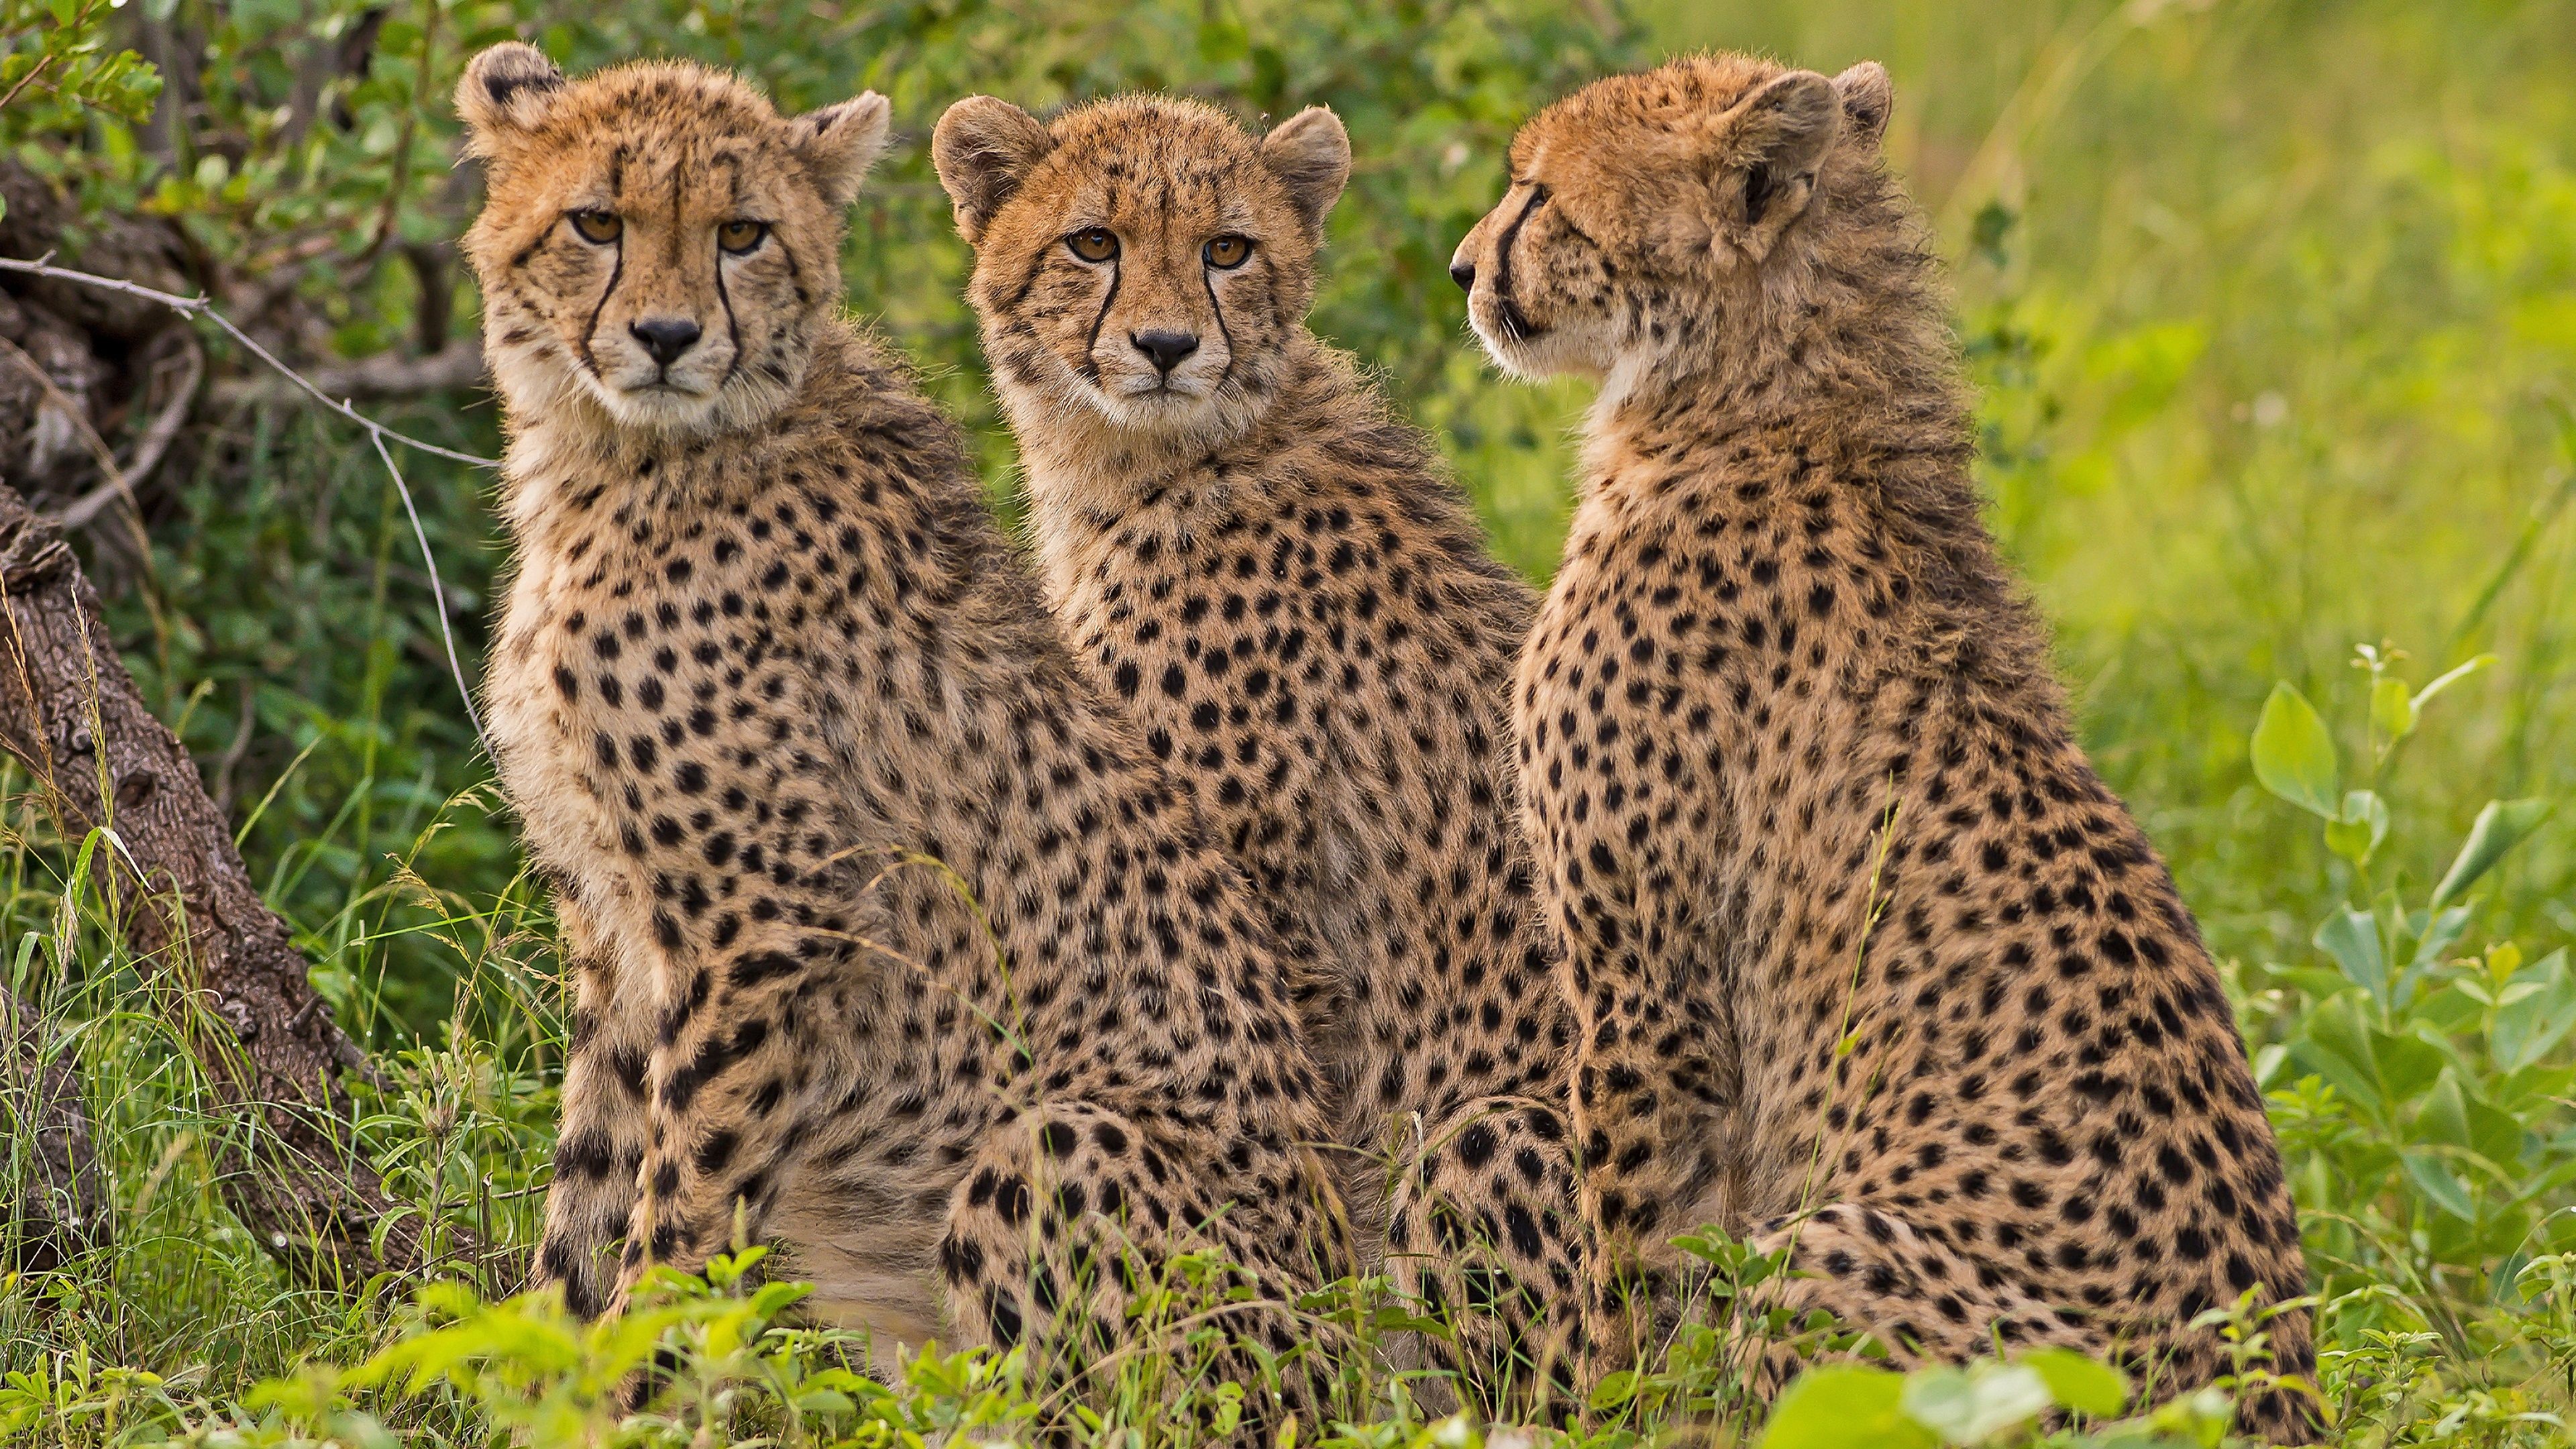 Three young cheetahs, Majestic and playful, Striking animal wallpaper, Captivating wildlife, 3840x2160 4K Desktop